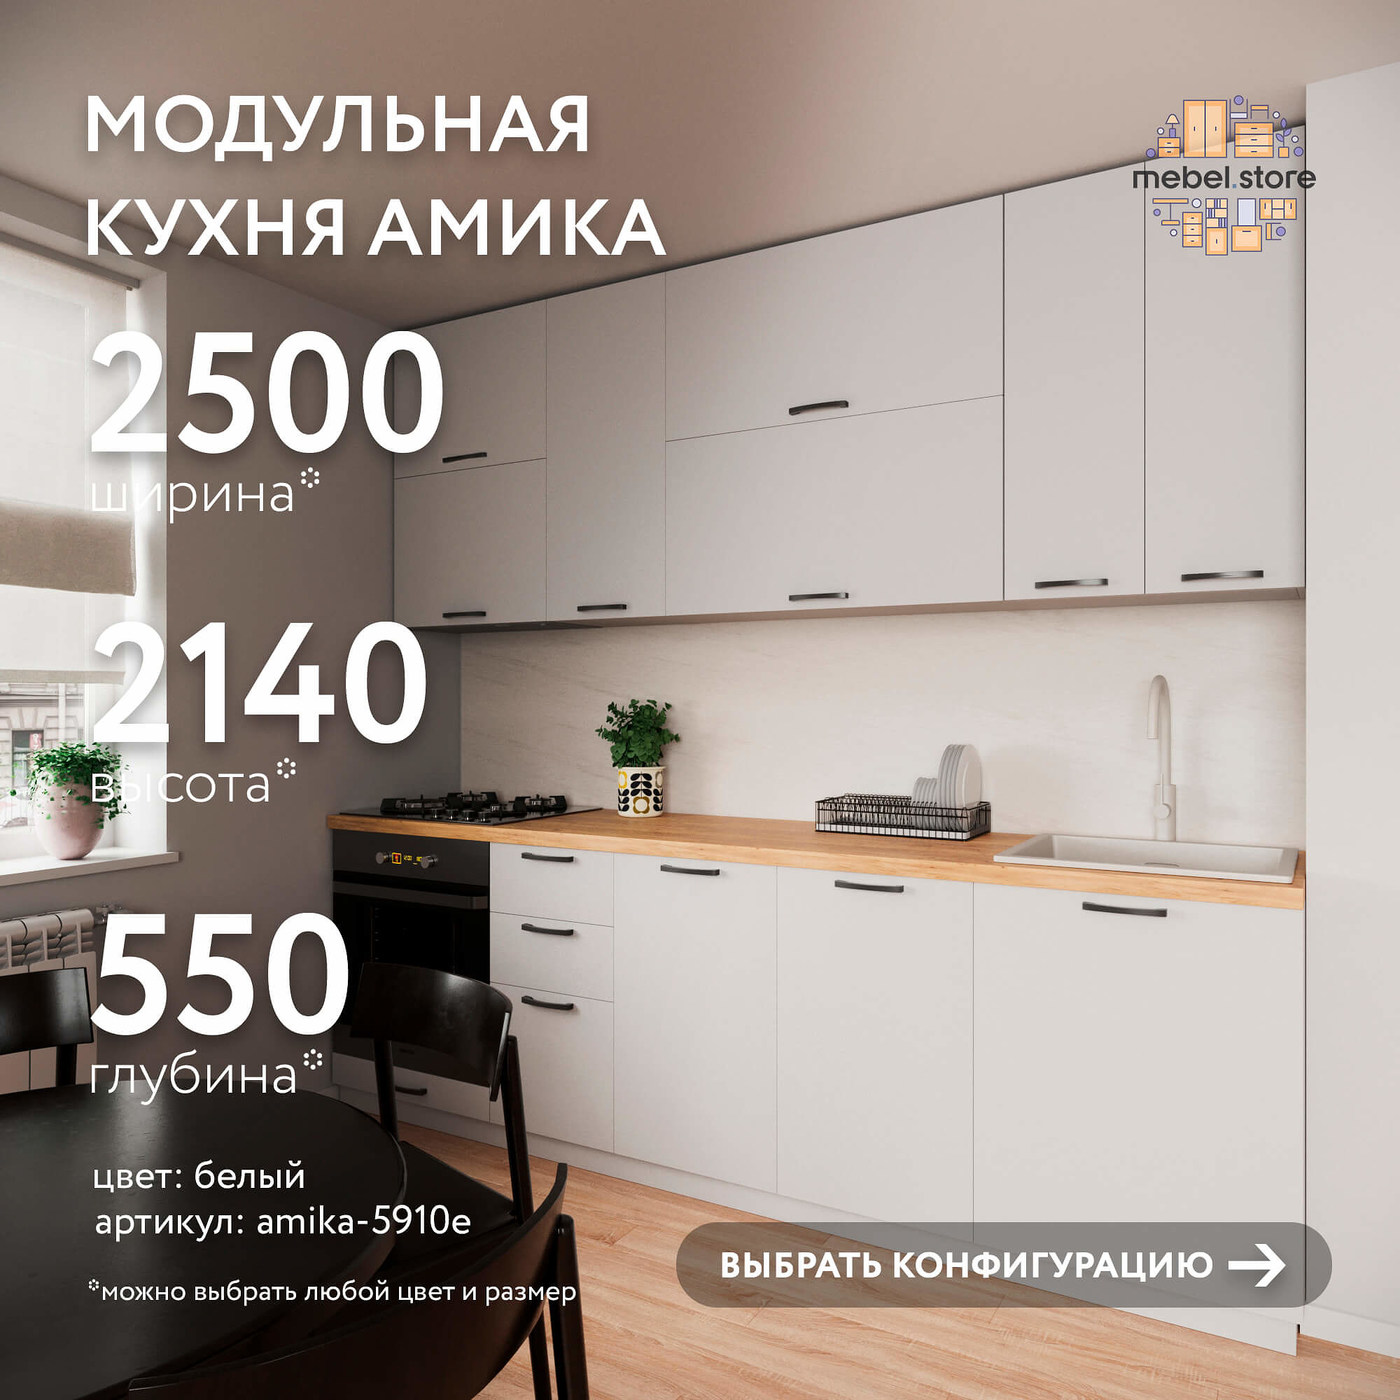 Модульная кухня Амика-5910e минимализм гарнитур - фото 1 large